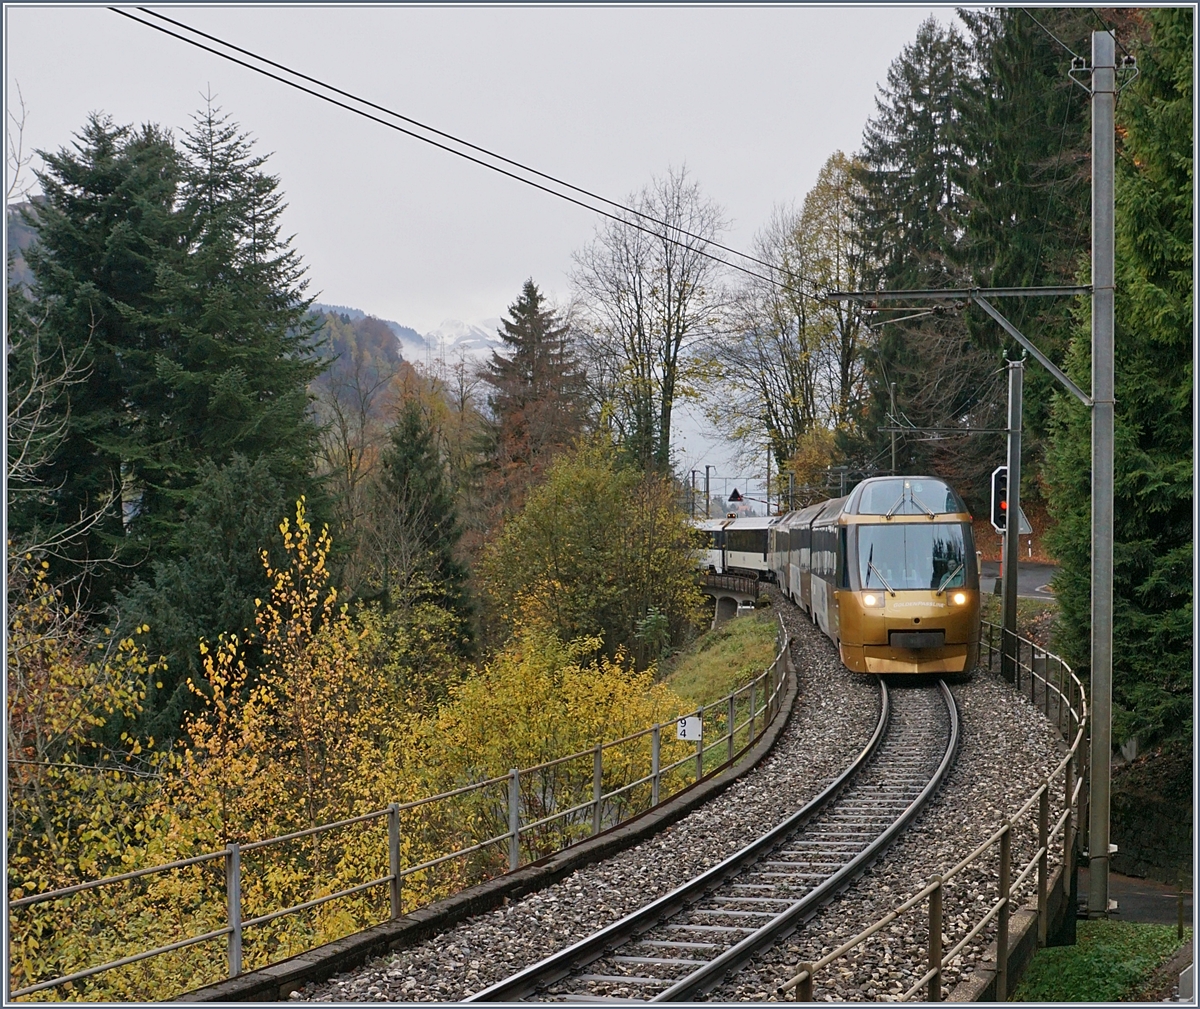 The MOB Panoramic Express near Les Avants.
11.11.2017